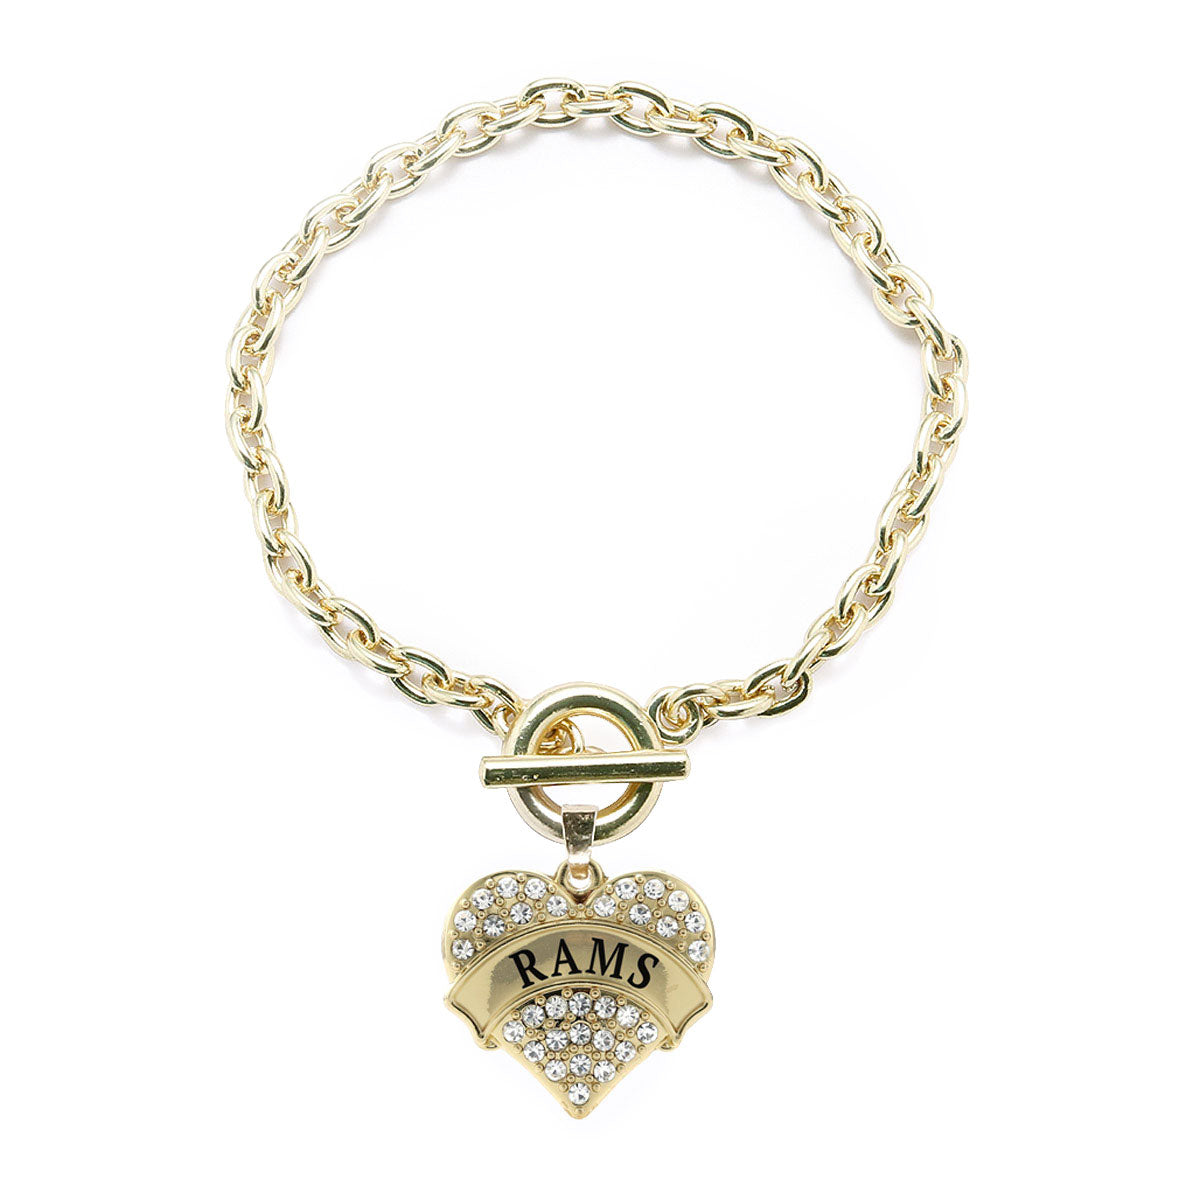 Gold Rams Pave Heart Charm Toggle Bracelet